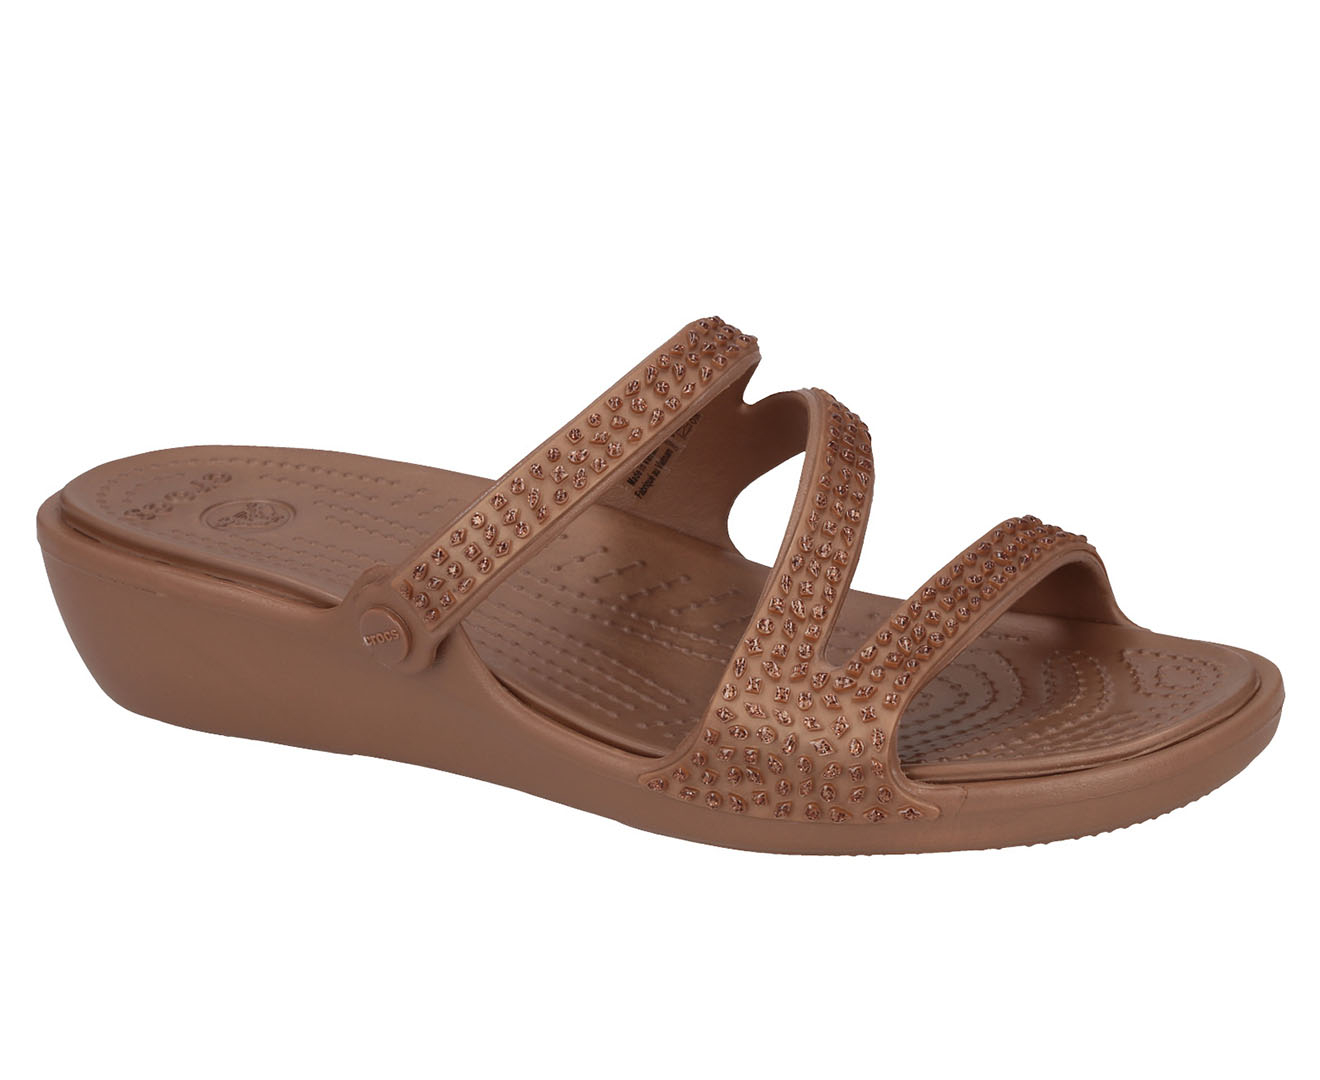 Crocs Women's Patricia Diamante Sandals - Bronze | Catch.com.au